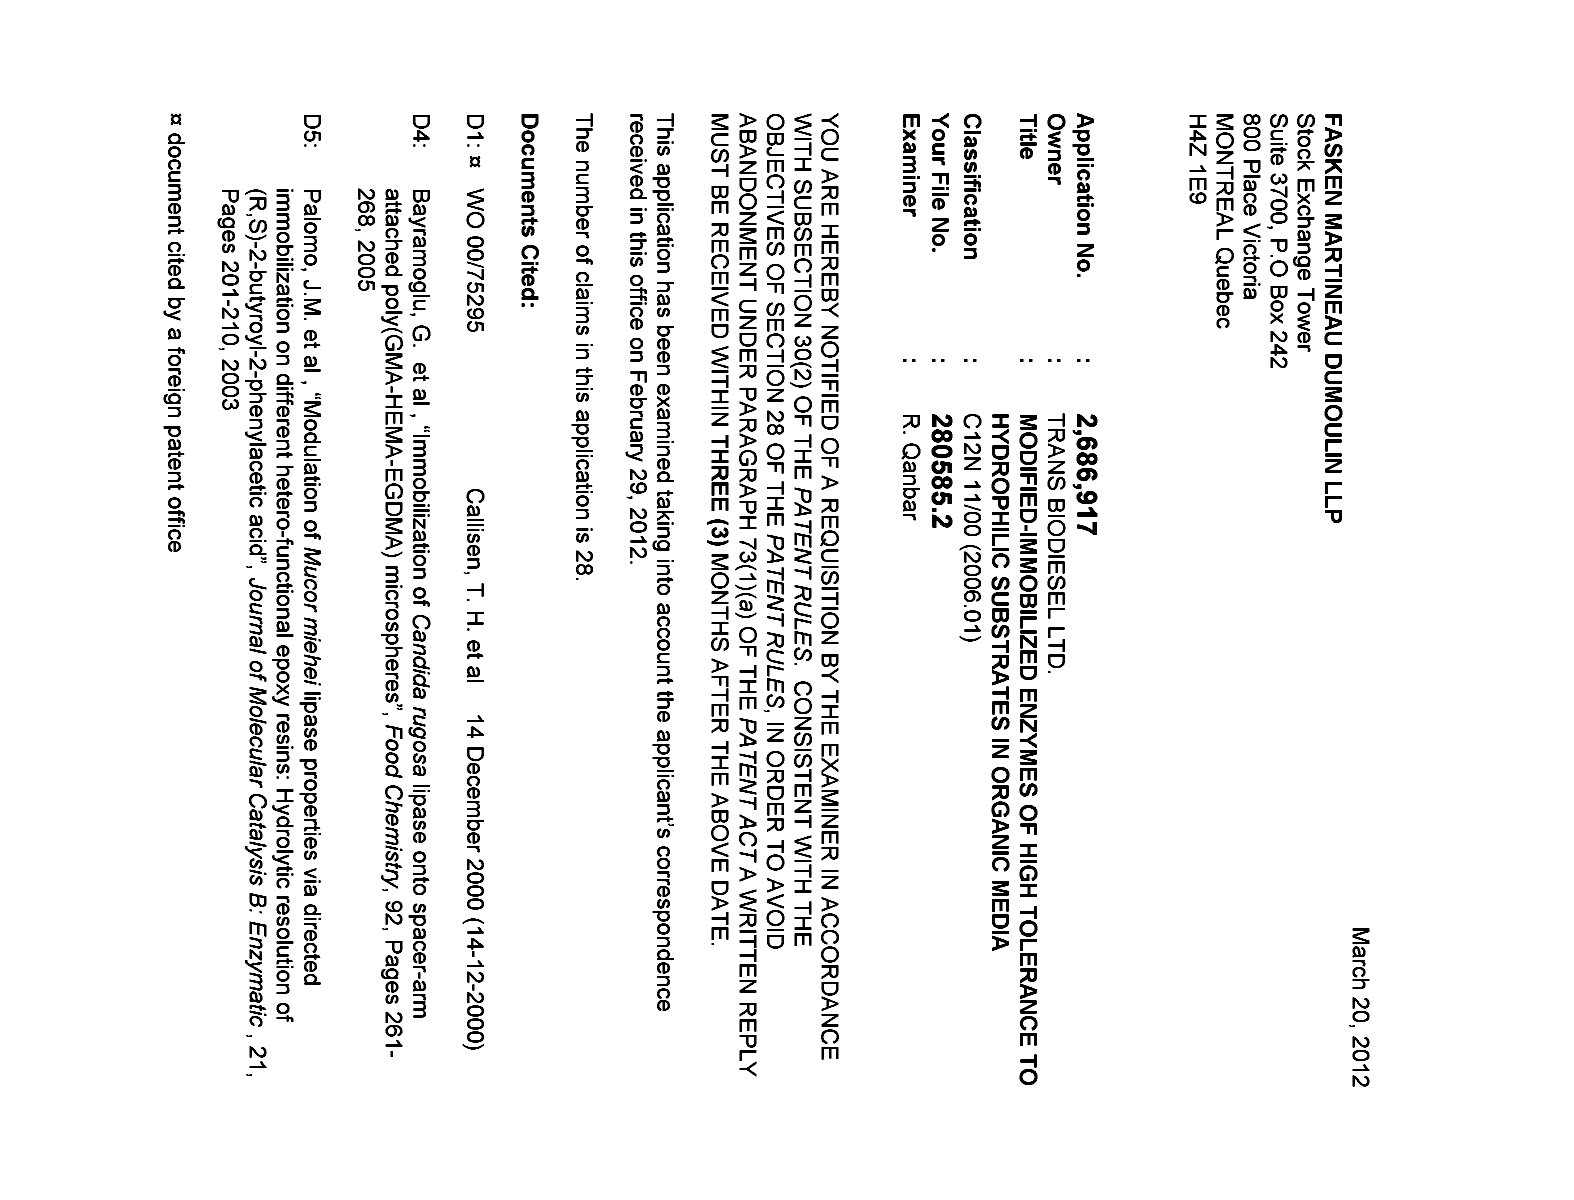 Canadian Patent Document 2686917. Prosecution-Amendment 20120320. Image 1 of 6